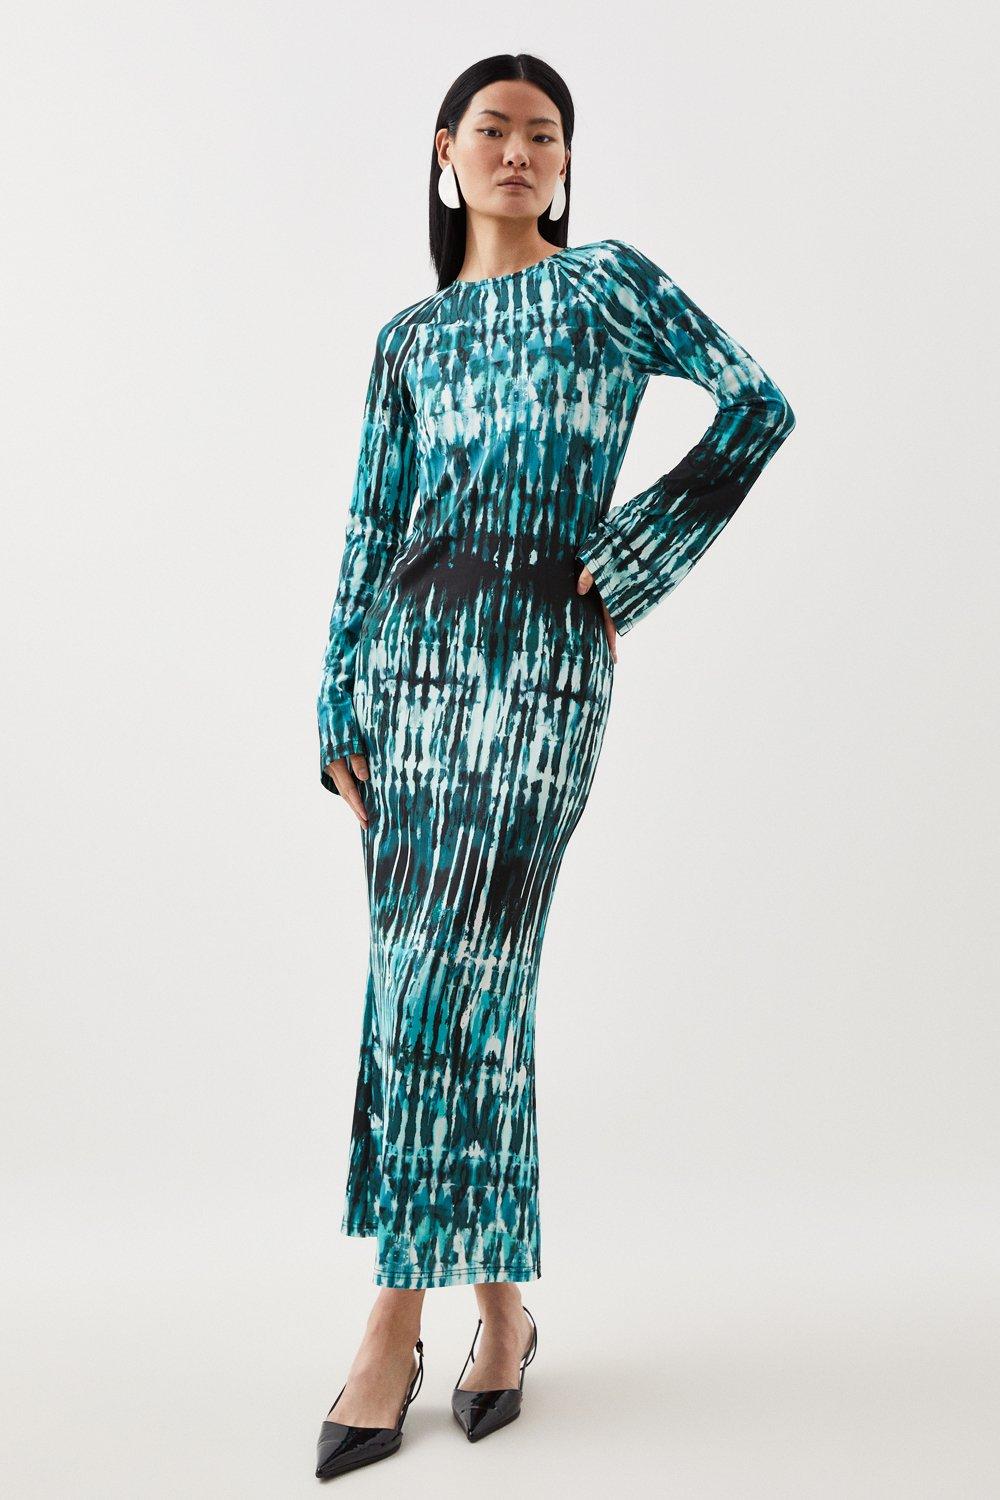 Abstract Print Jersey Maxi Dress